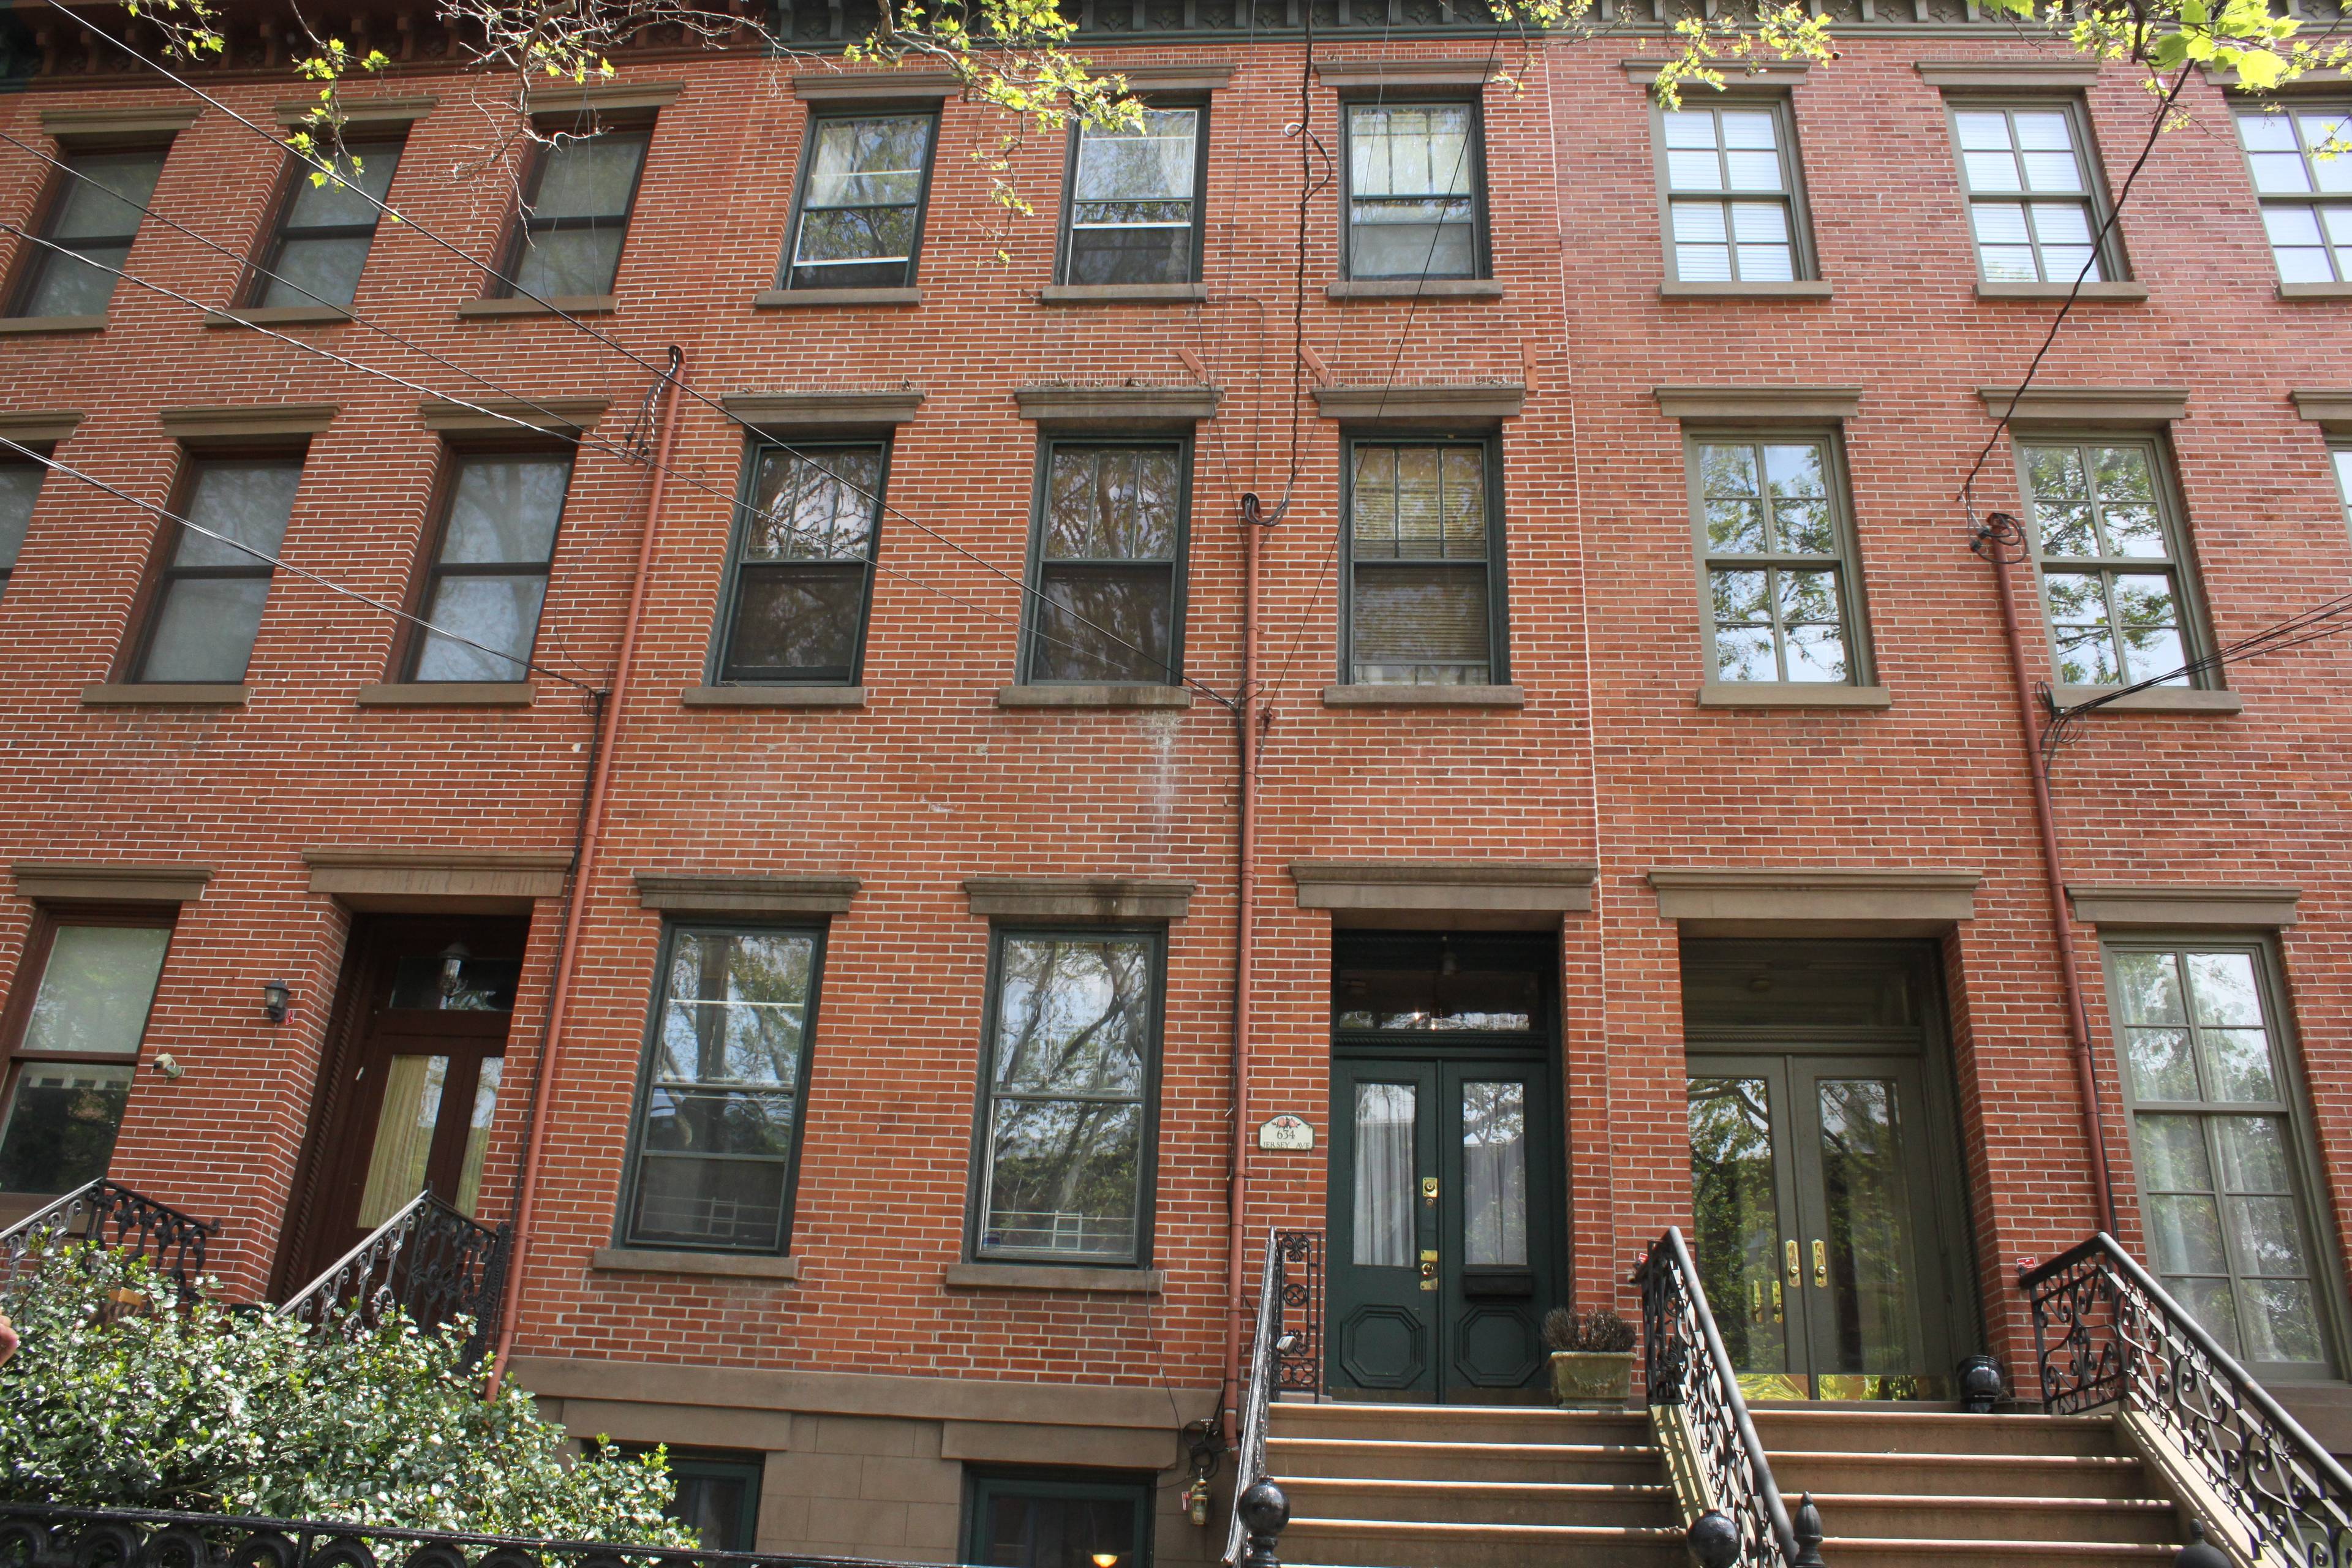 Studio Alcove Brownstone Apartment in Hamilton Park for Rent $1,900/m